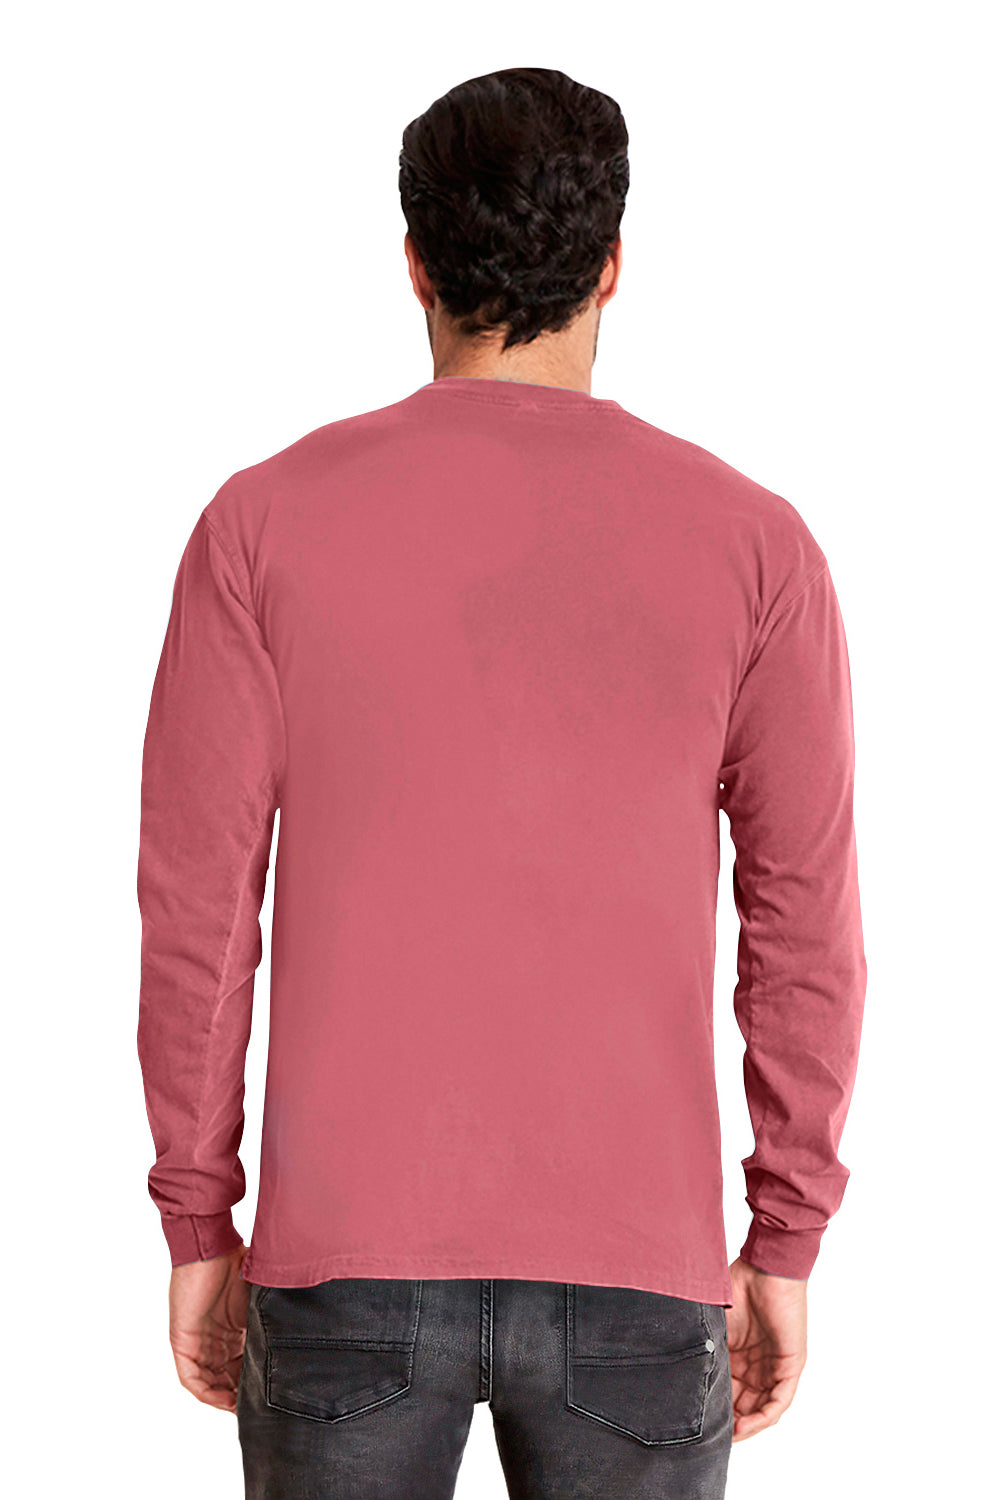 Next Level 7451 Mens Inspired Dye Jersey Long Sleeve Crewneck T-Shirt w/ Pocket Paprika Red Back